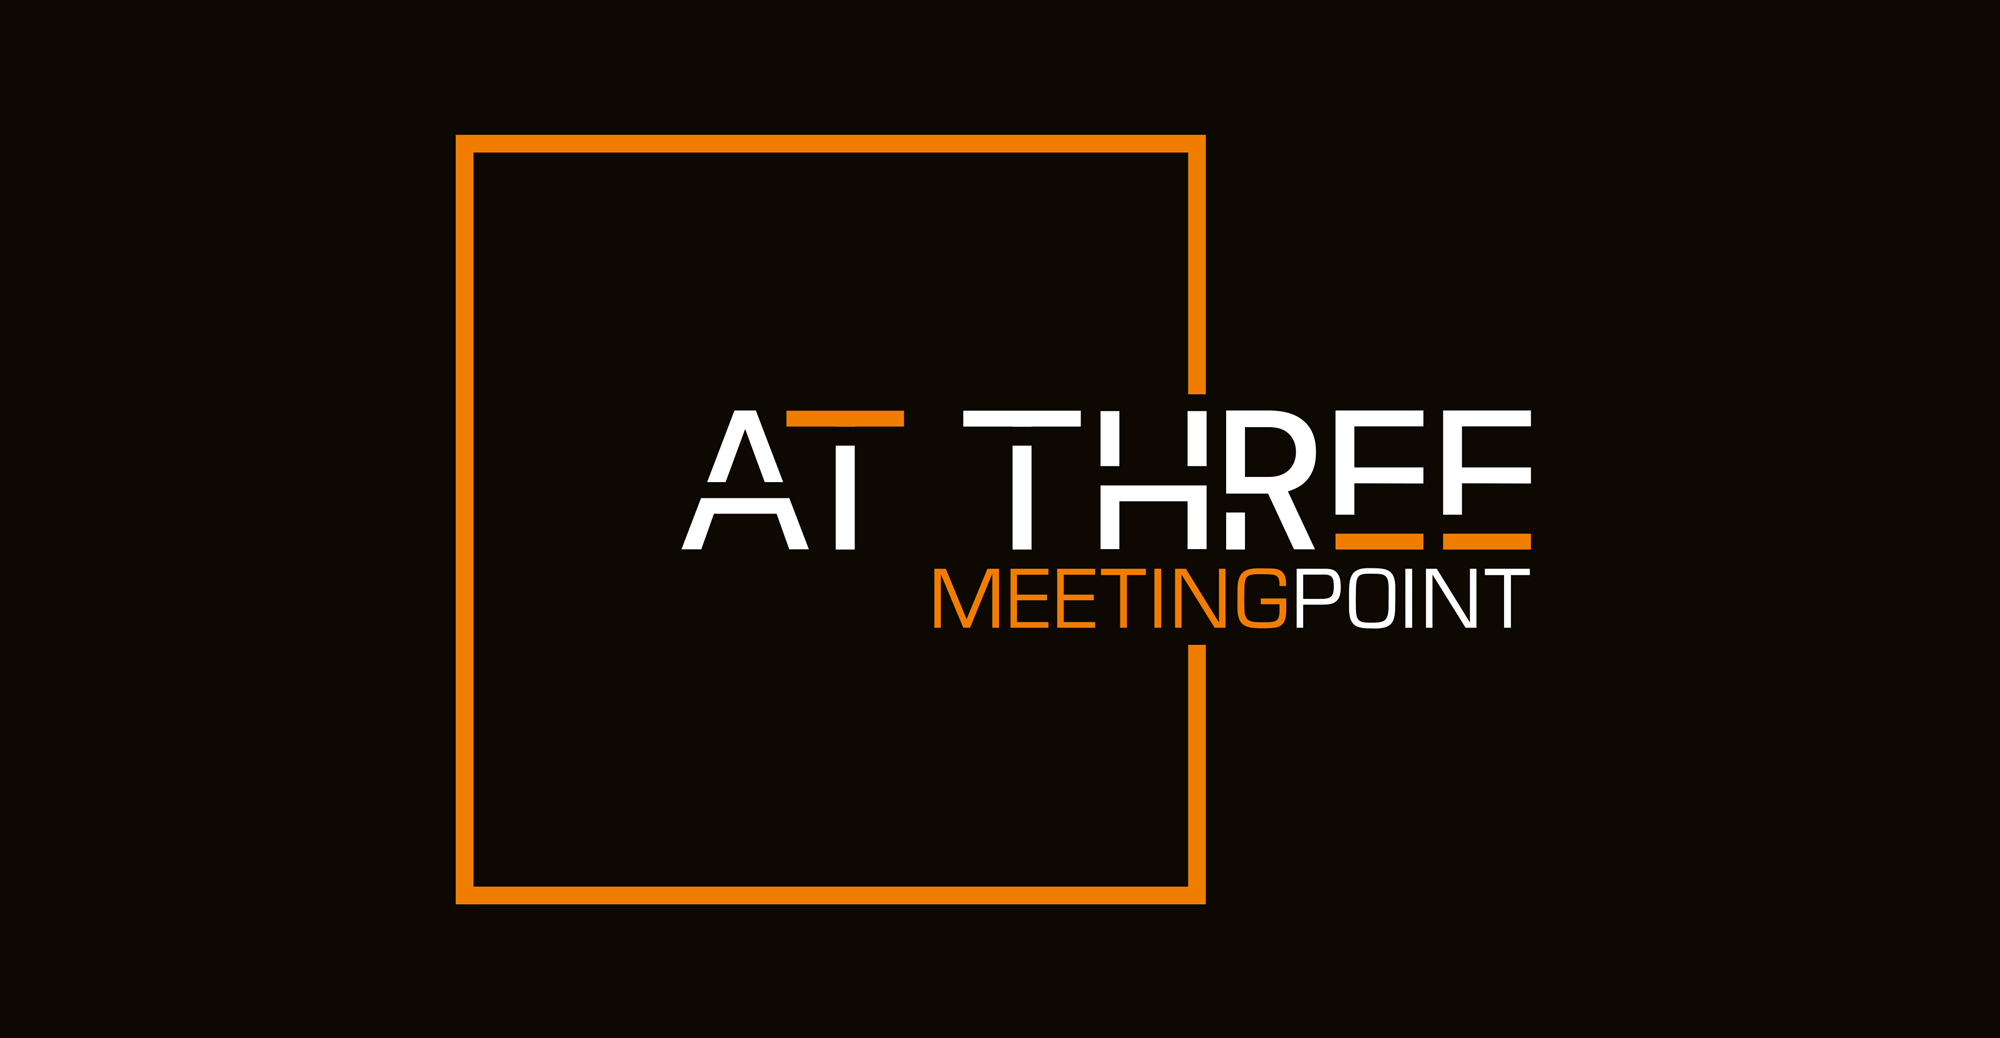 Meetingpoint At Three